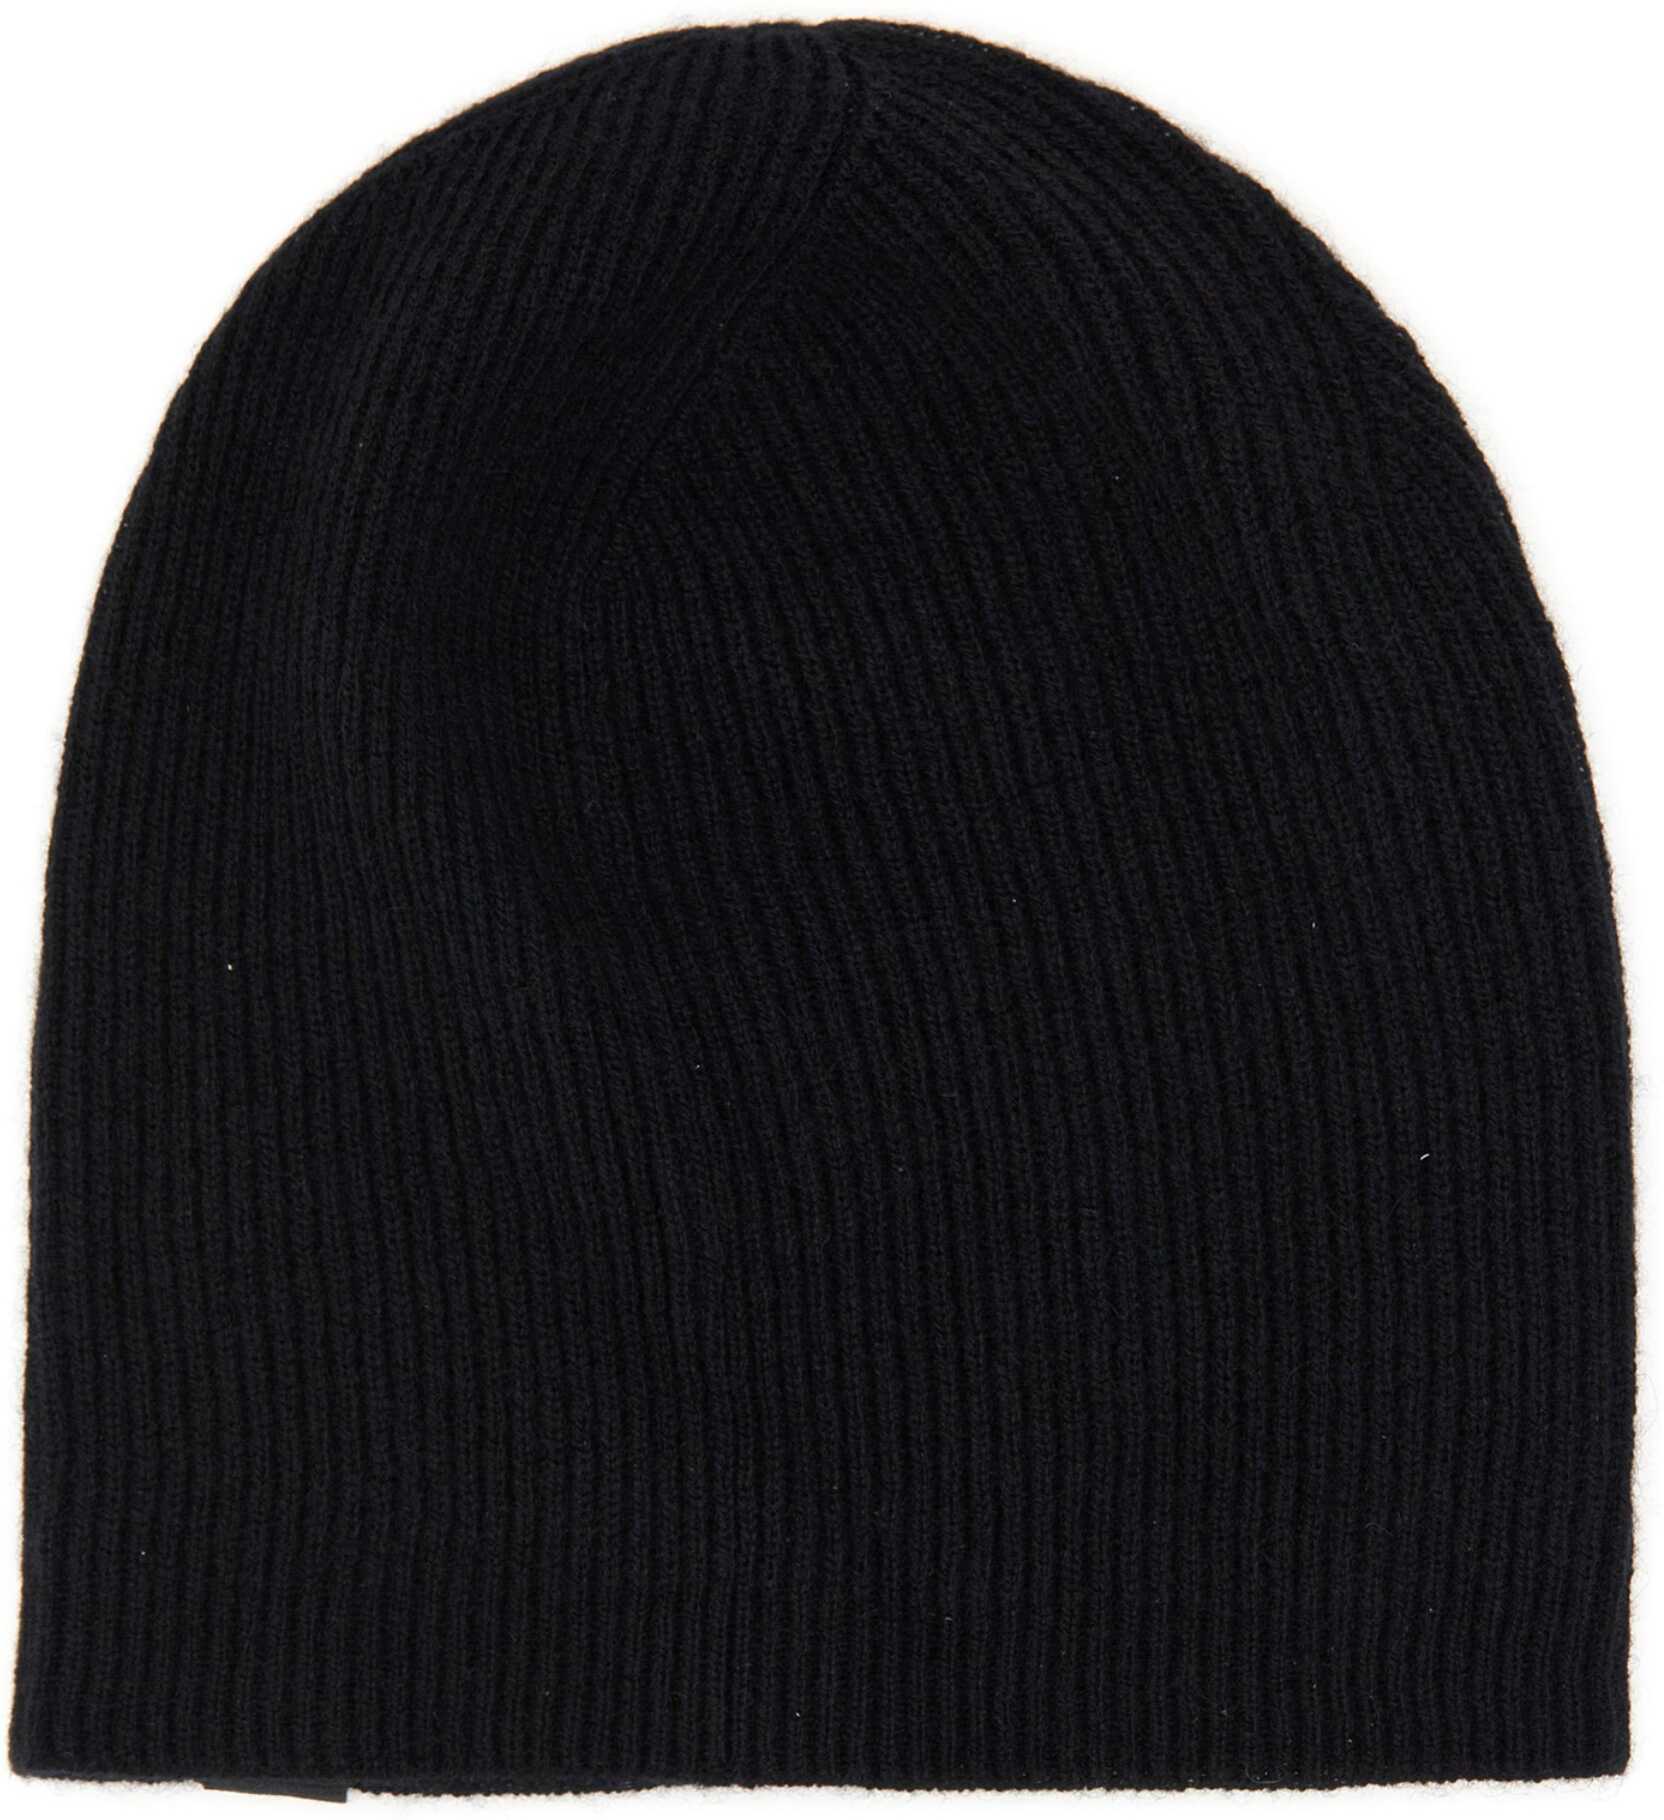 CANADA GOOSE Beanie Hat BLACK